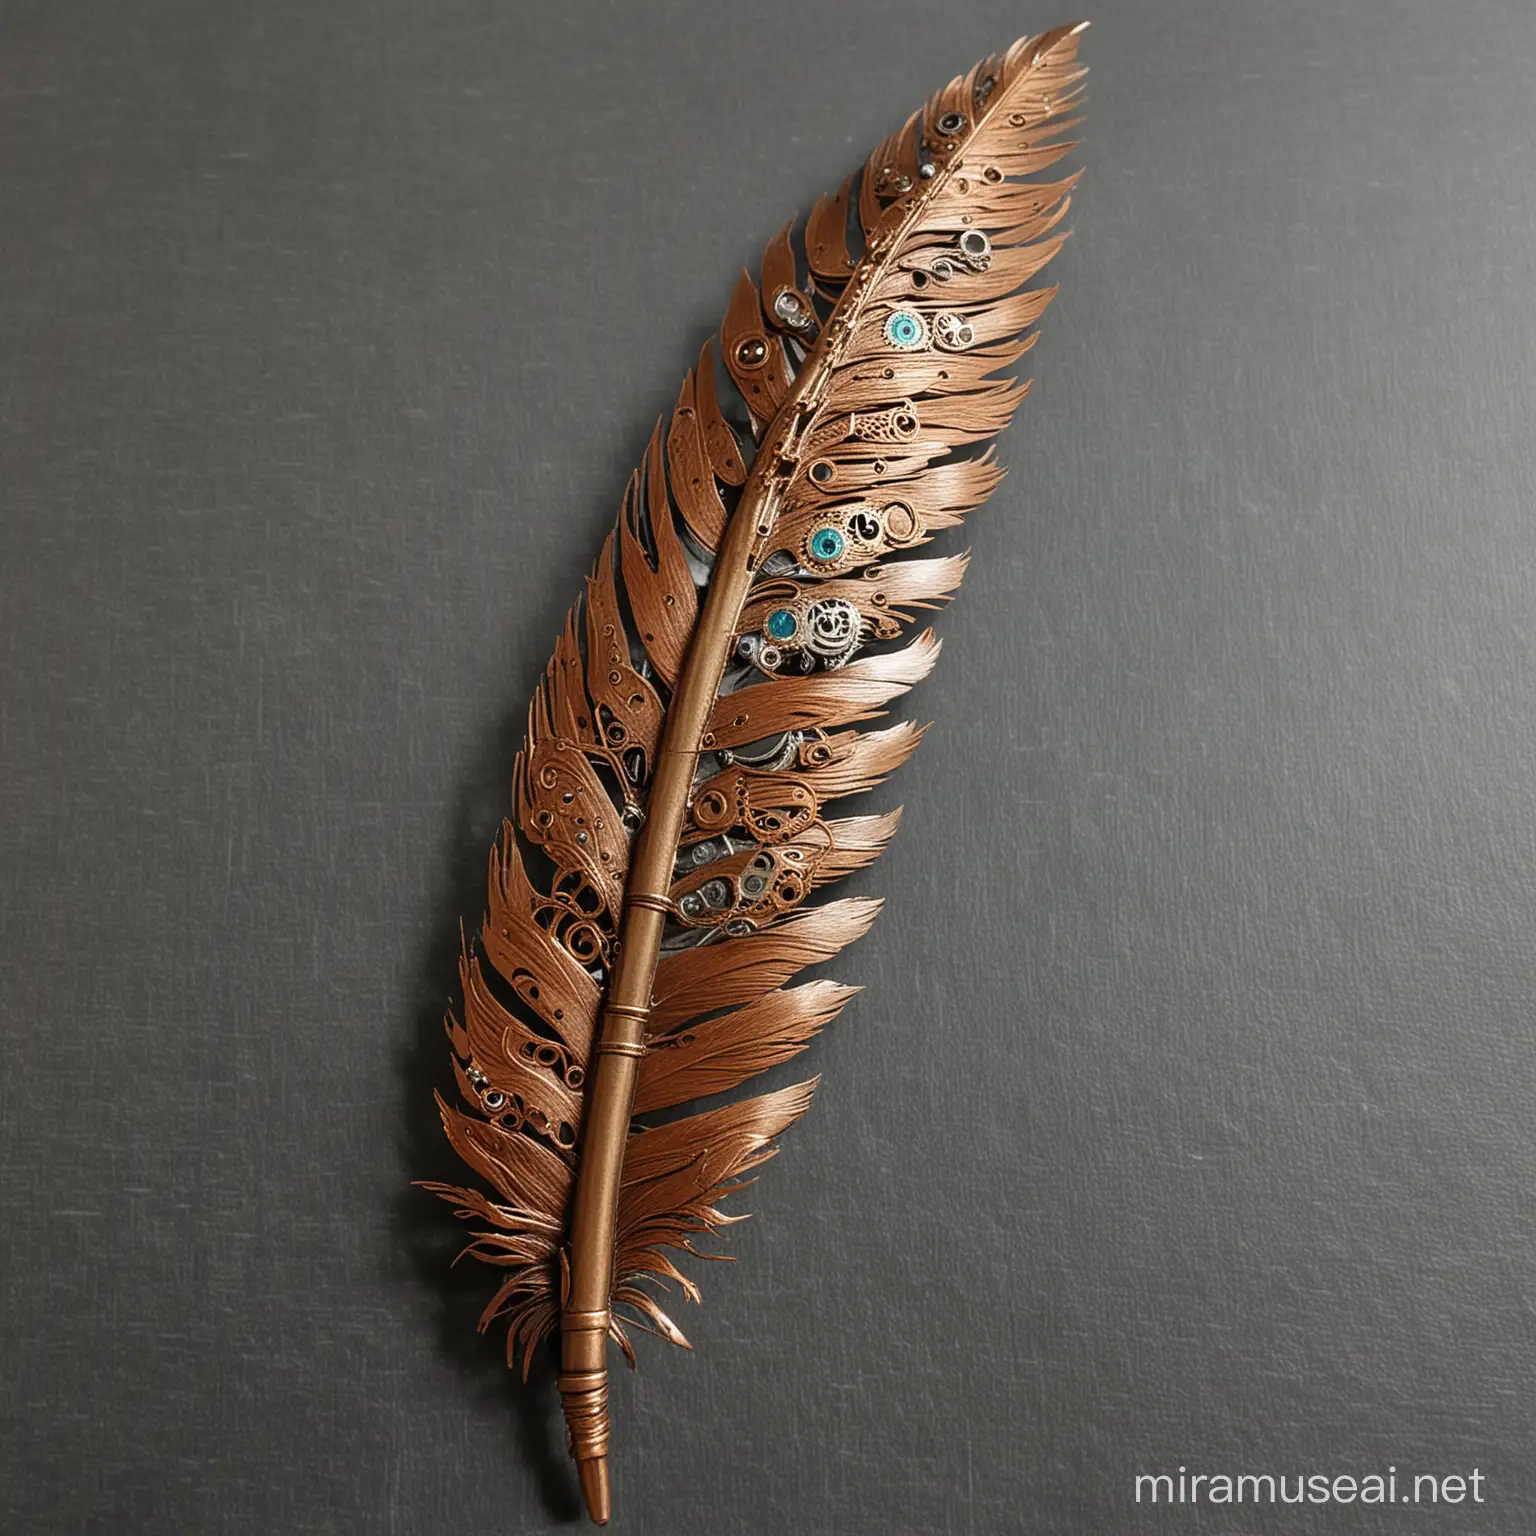 Steampunk feather
